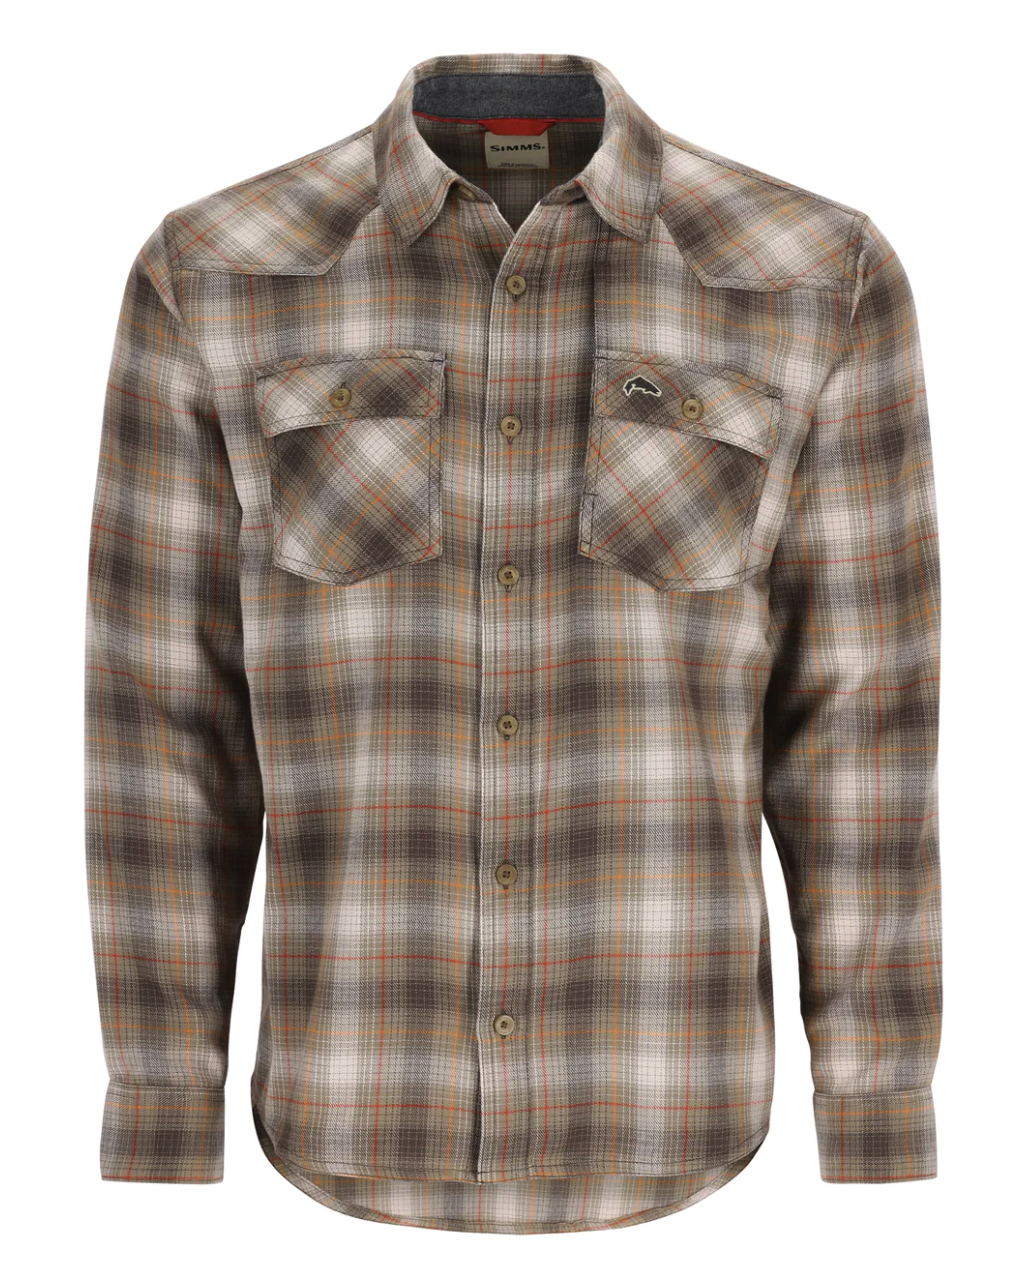 Buy Simms flannel fishing shirts online.